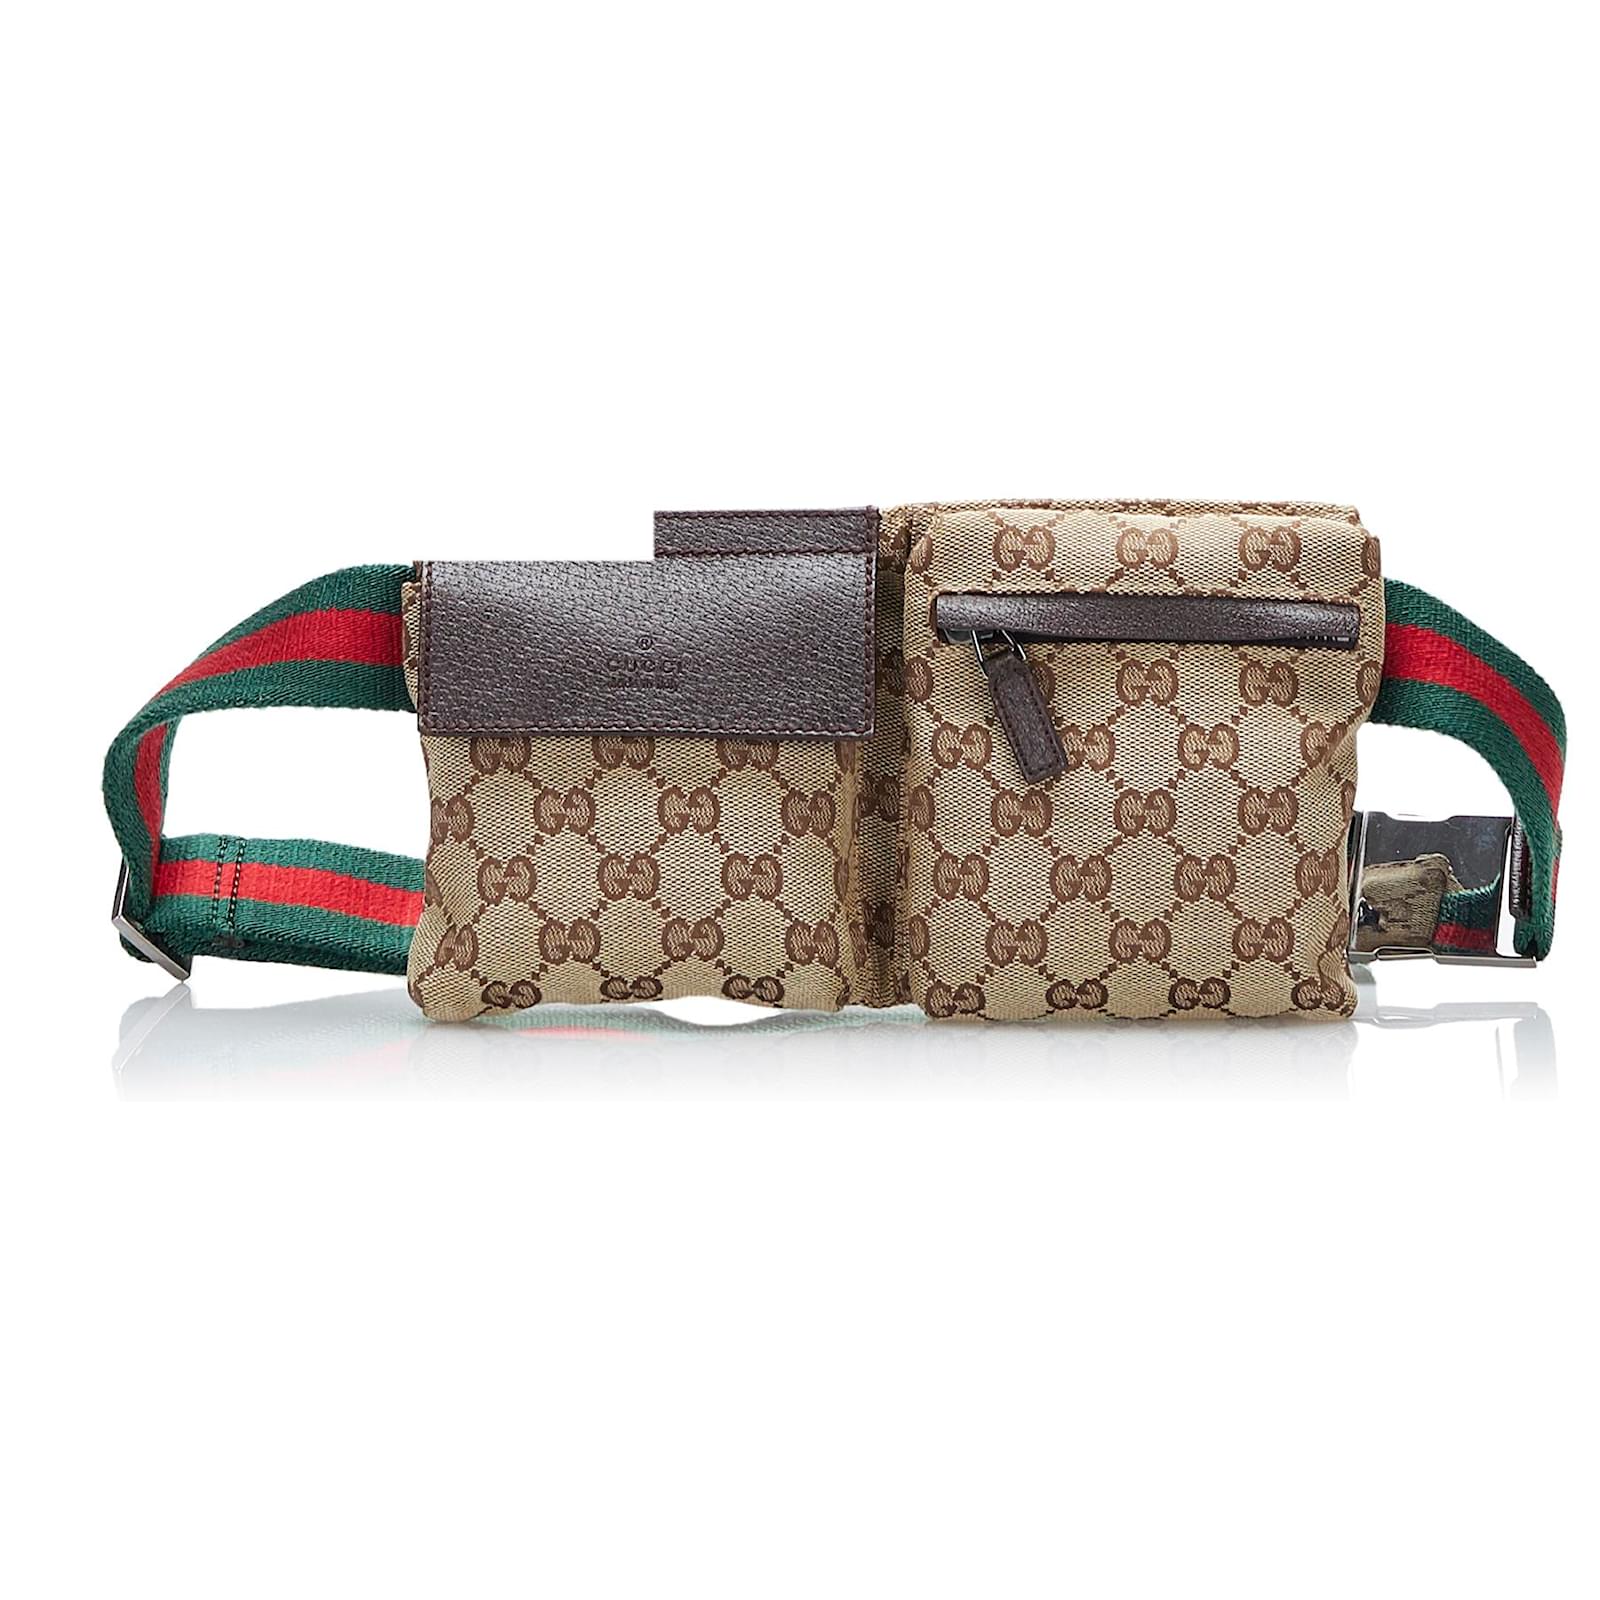 Gucci GG Supreme Ophidia Web Belt Bag Brown